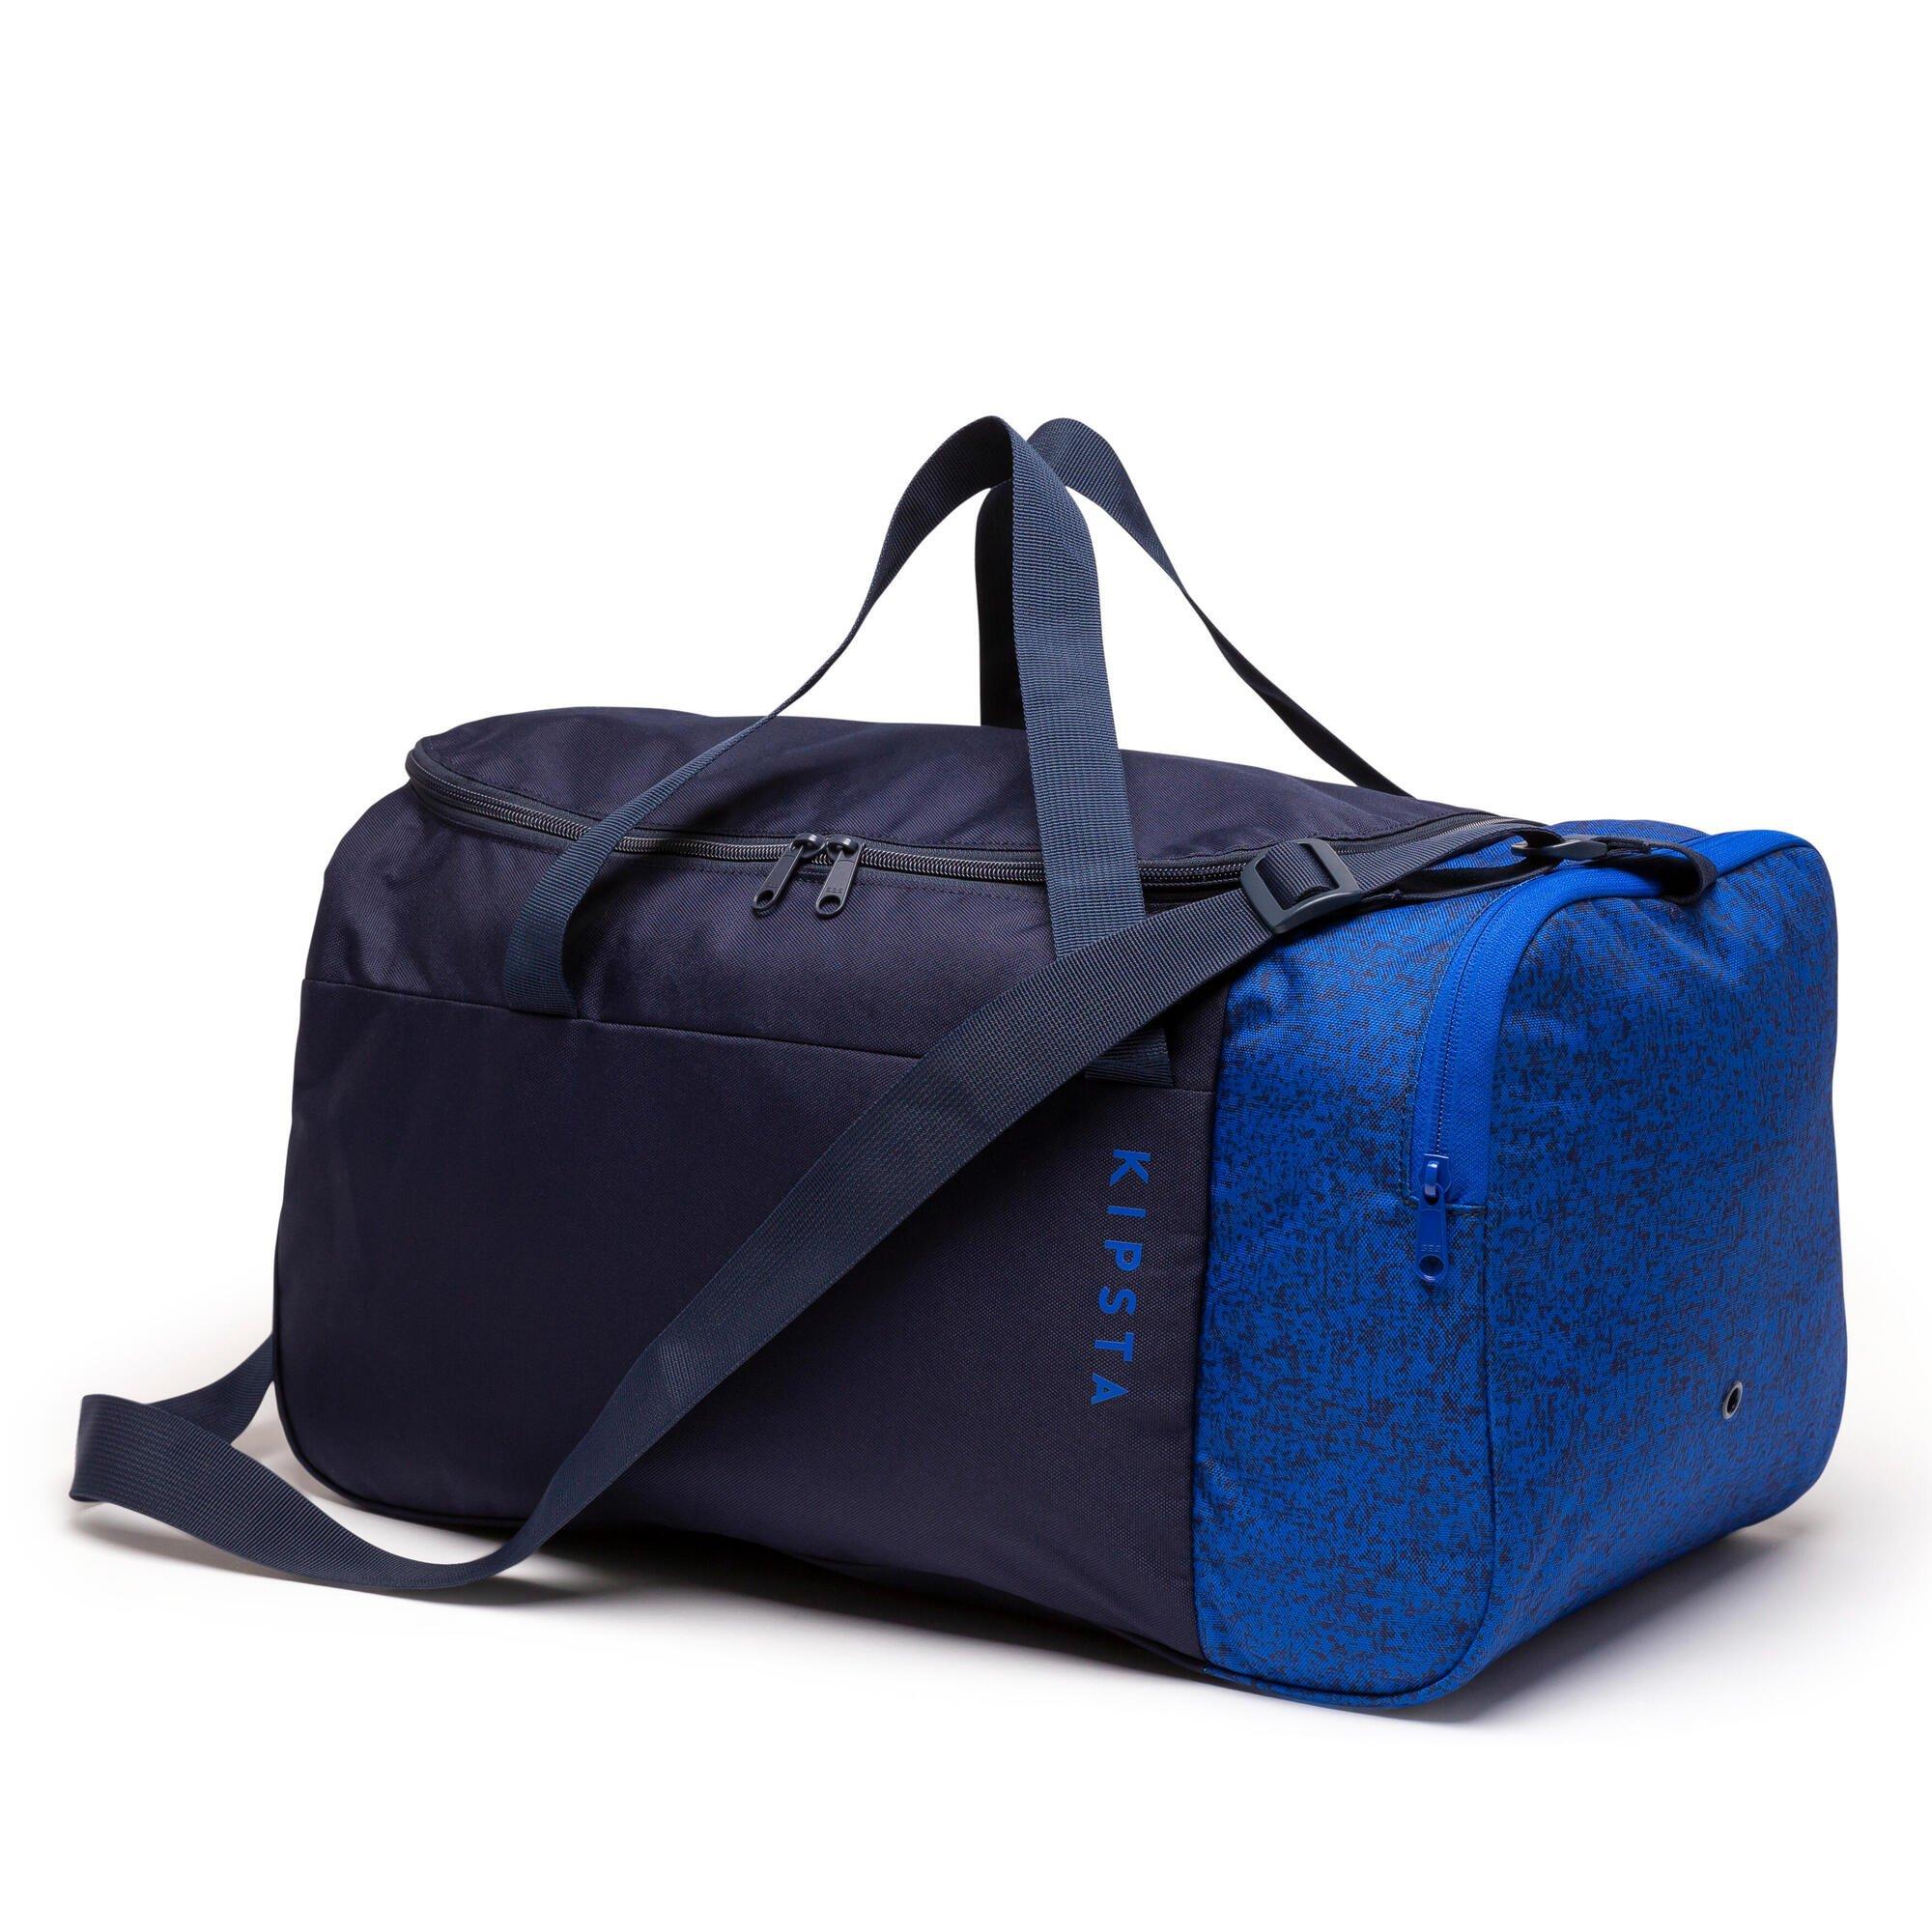 Спортивная сумка Decathlon Essential 35 л. Kipsta, темно-синий сумка c191 26 kingth goldn